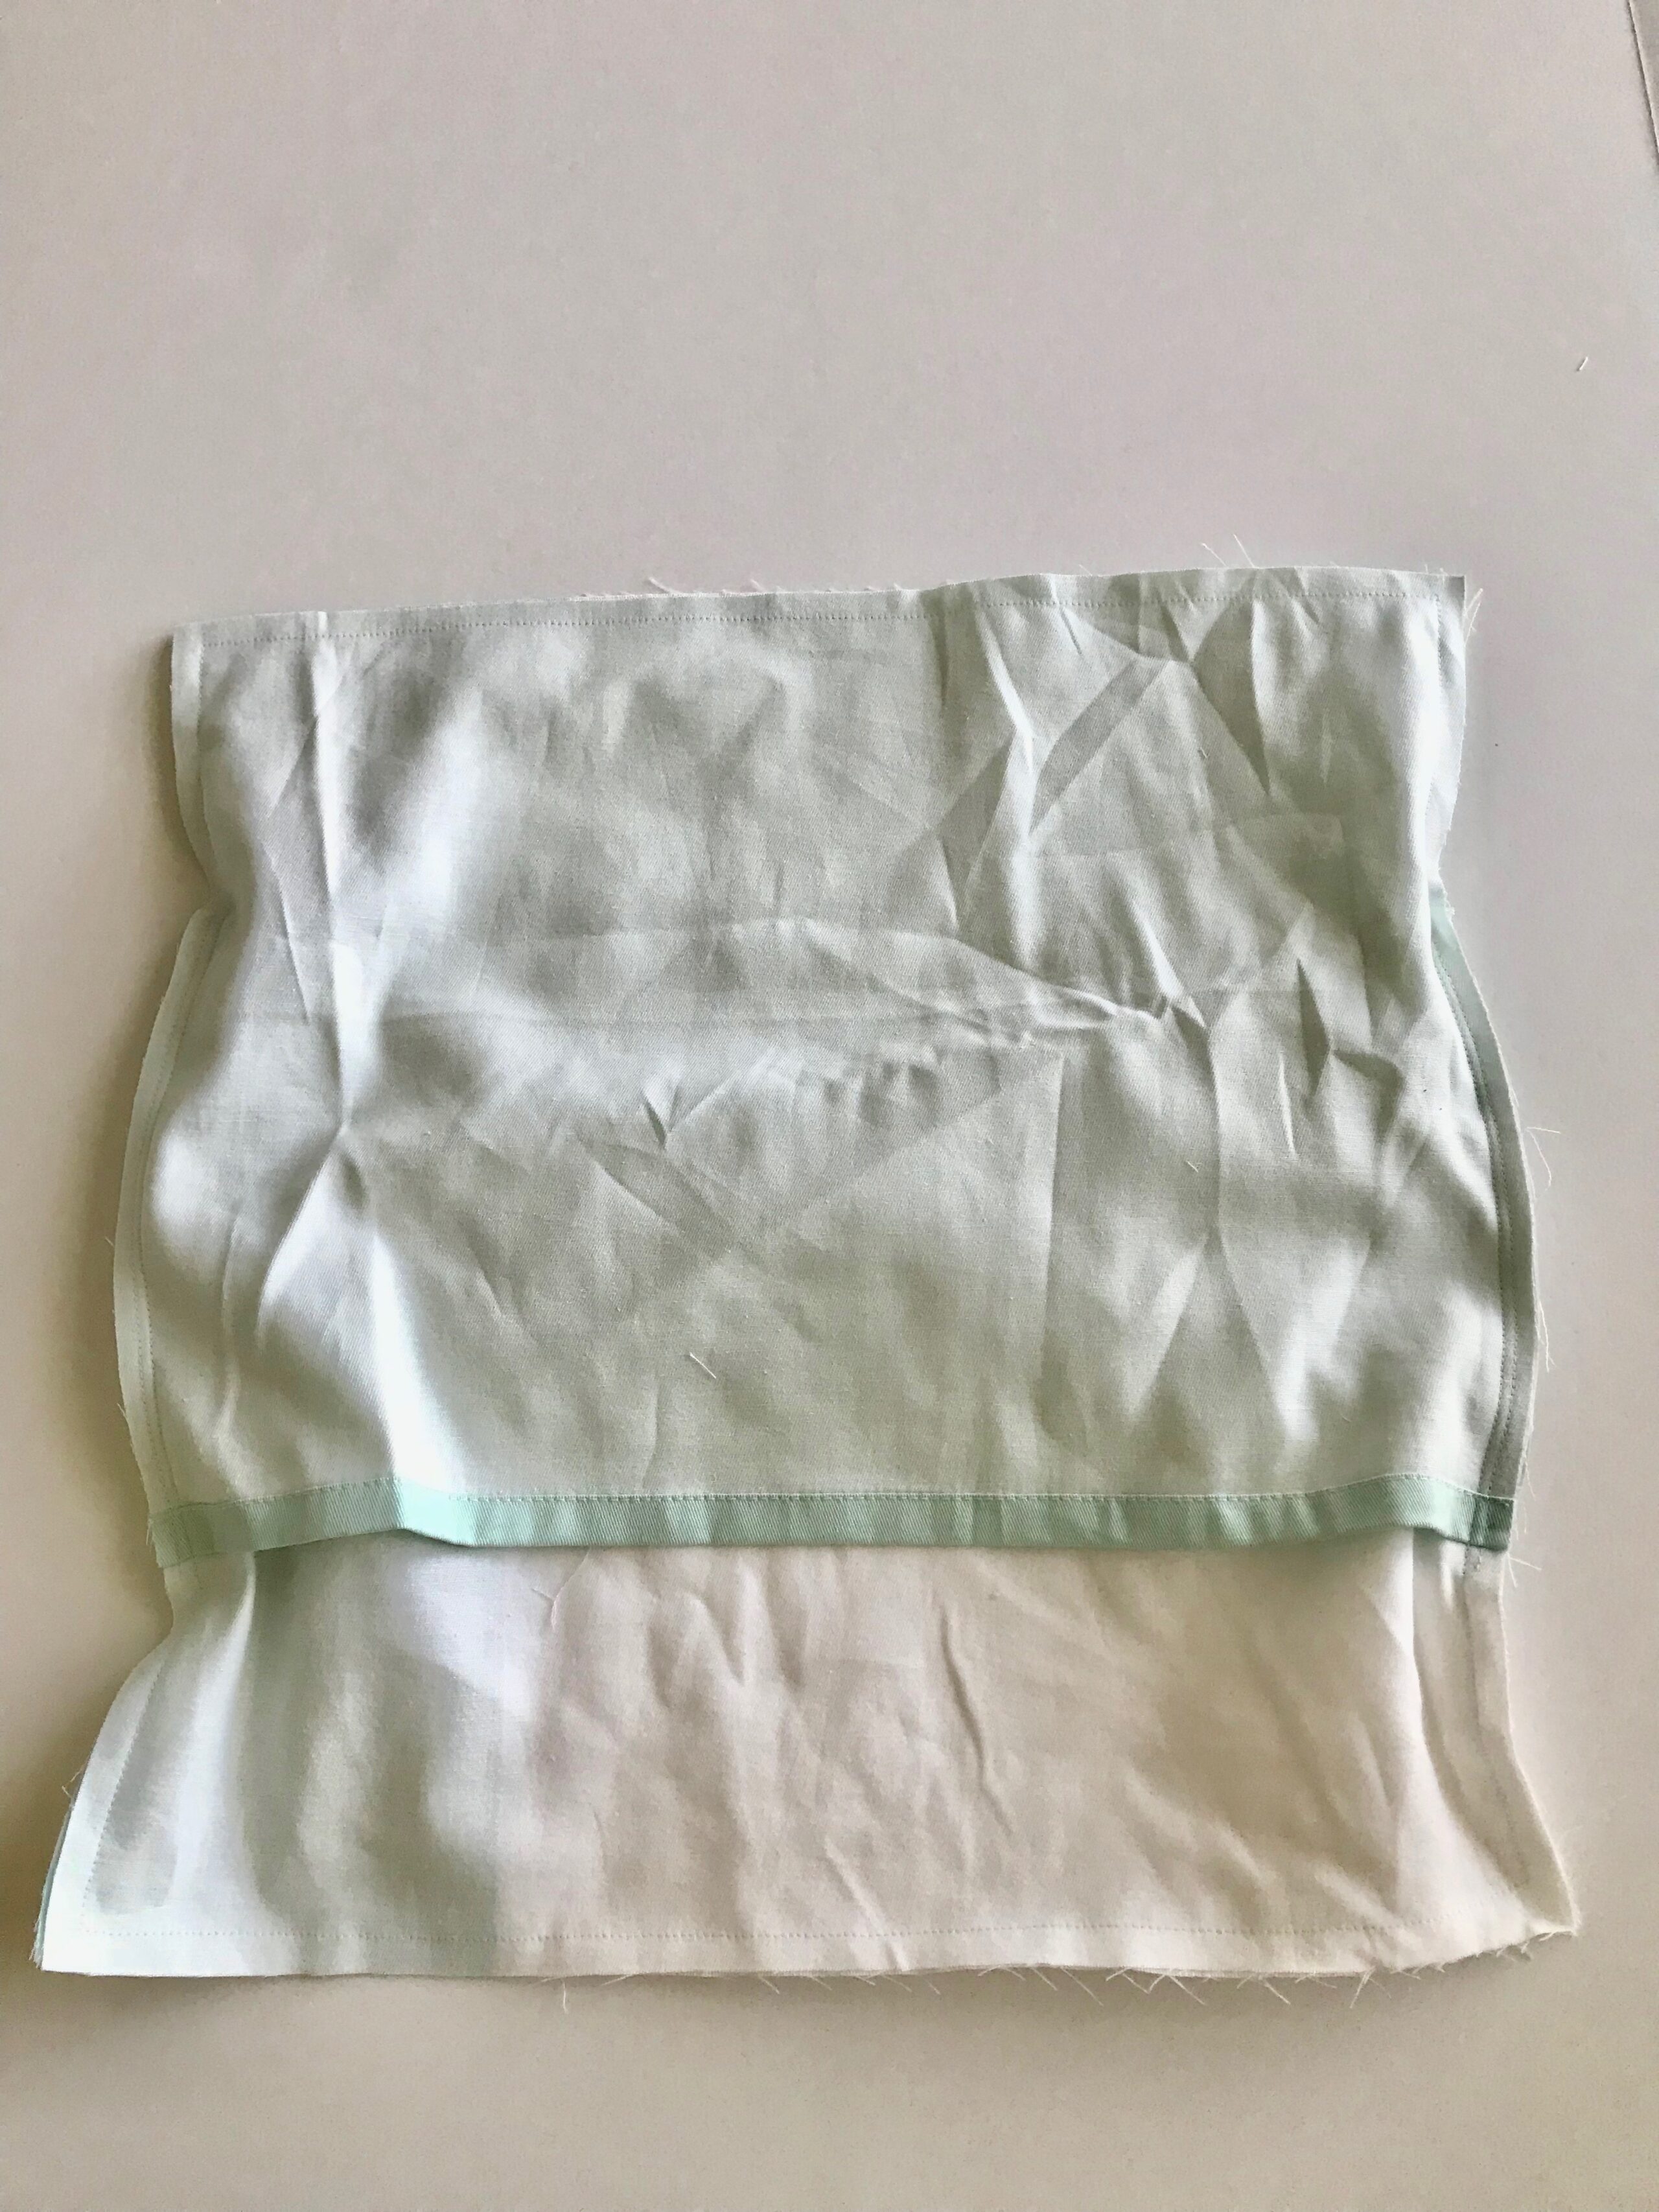 DIY Bow Pillow | Big Bow Pillow Cover Tutorial